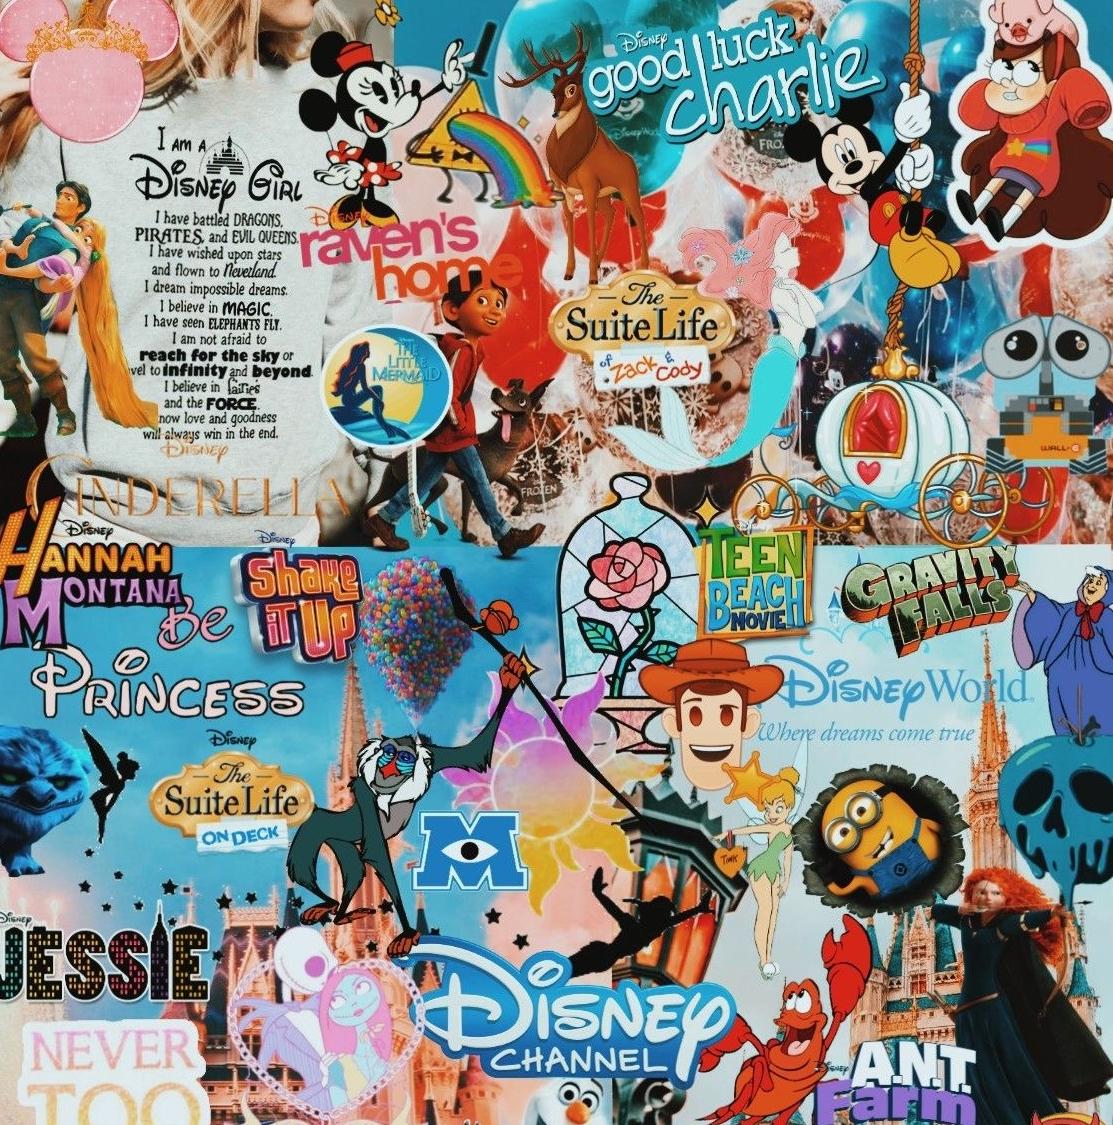 Disney girl 's images